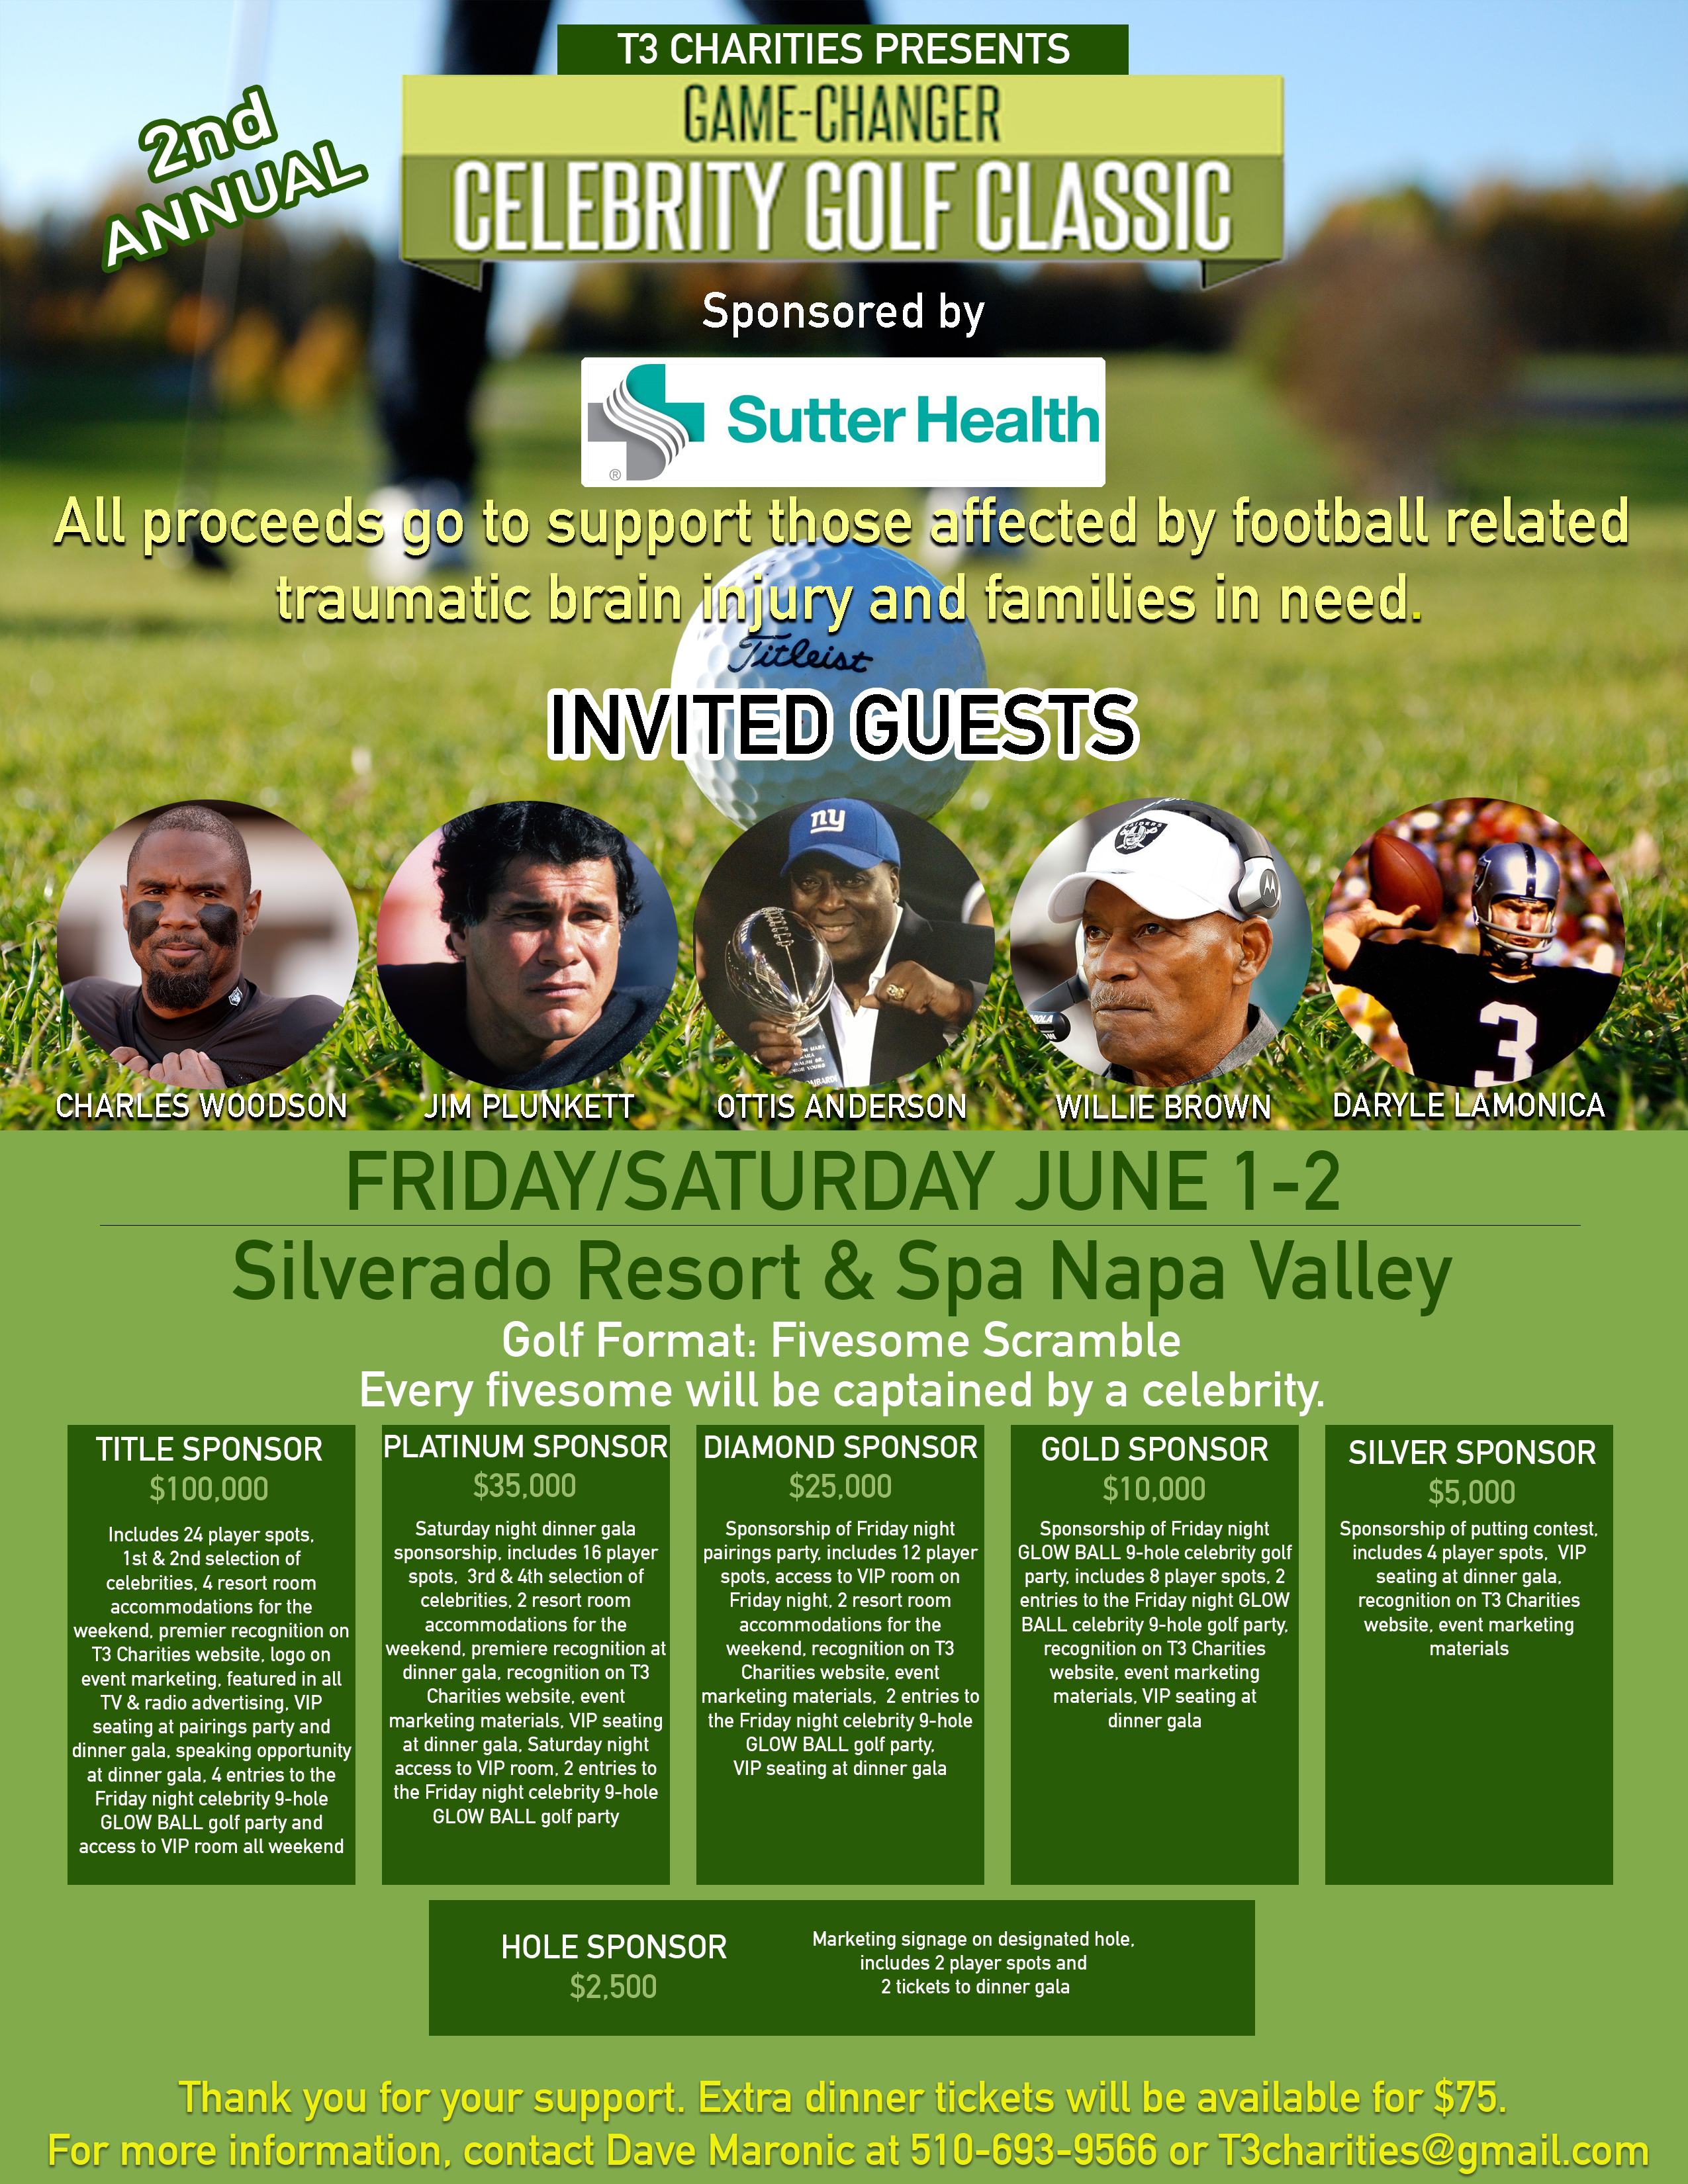 2018 Game-Changer Celebrity Golf Classic - Silverado Resort, June 1-2.